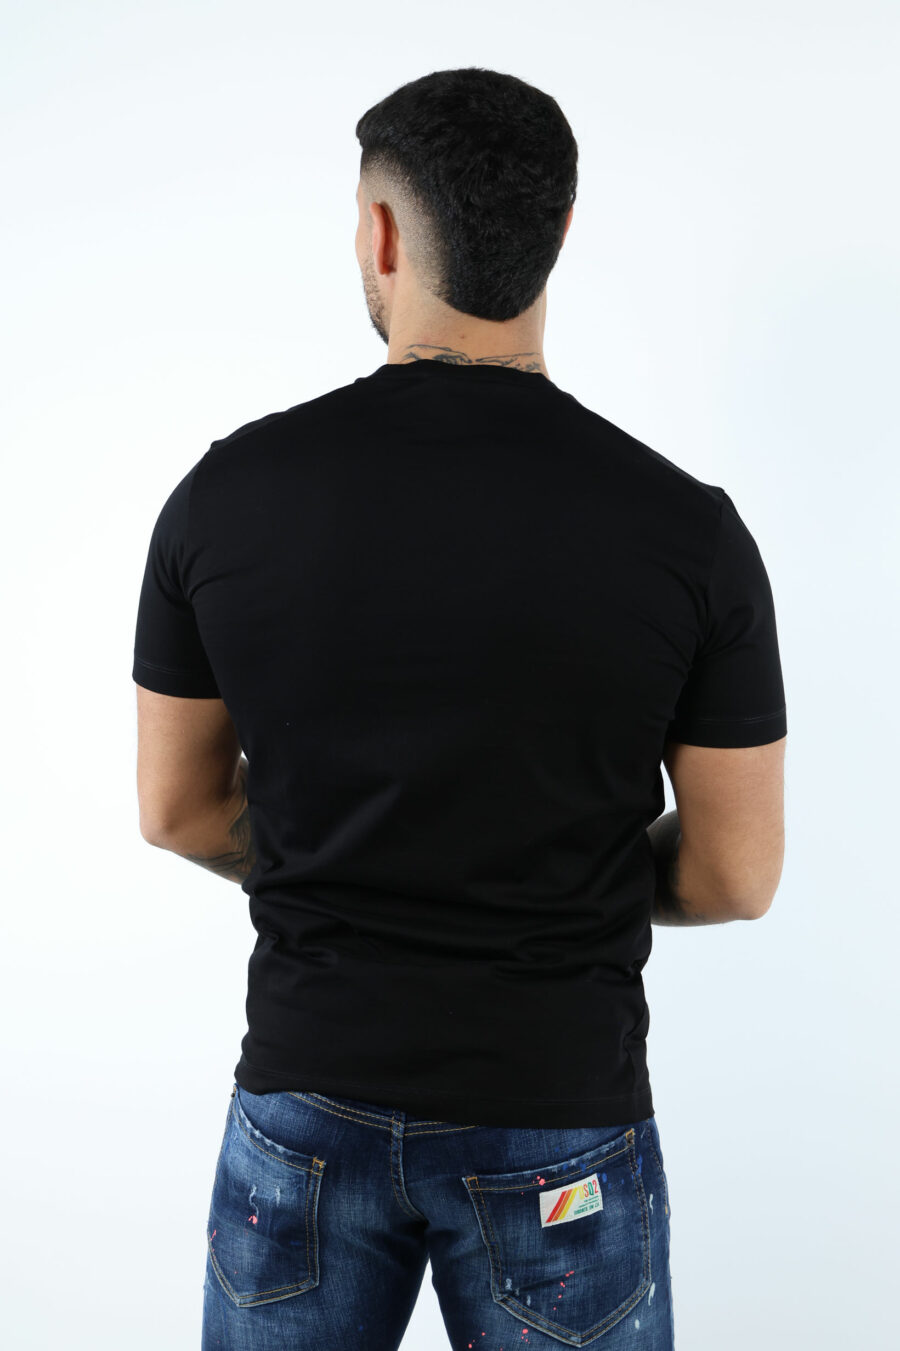 Camiseta negra con maxilogo "icon" naranja neon borroso - 106907